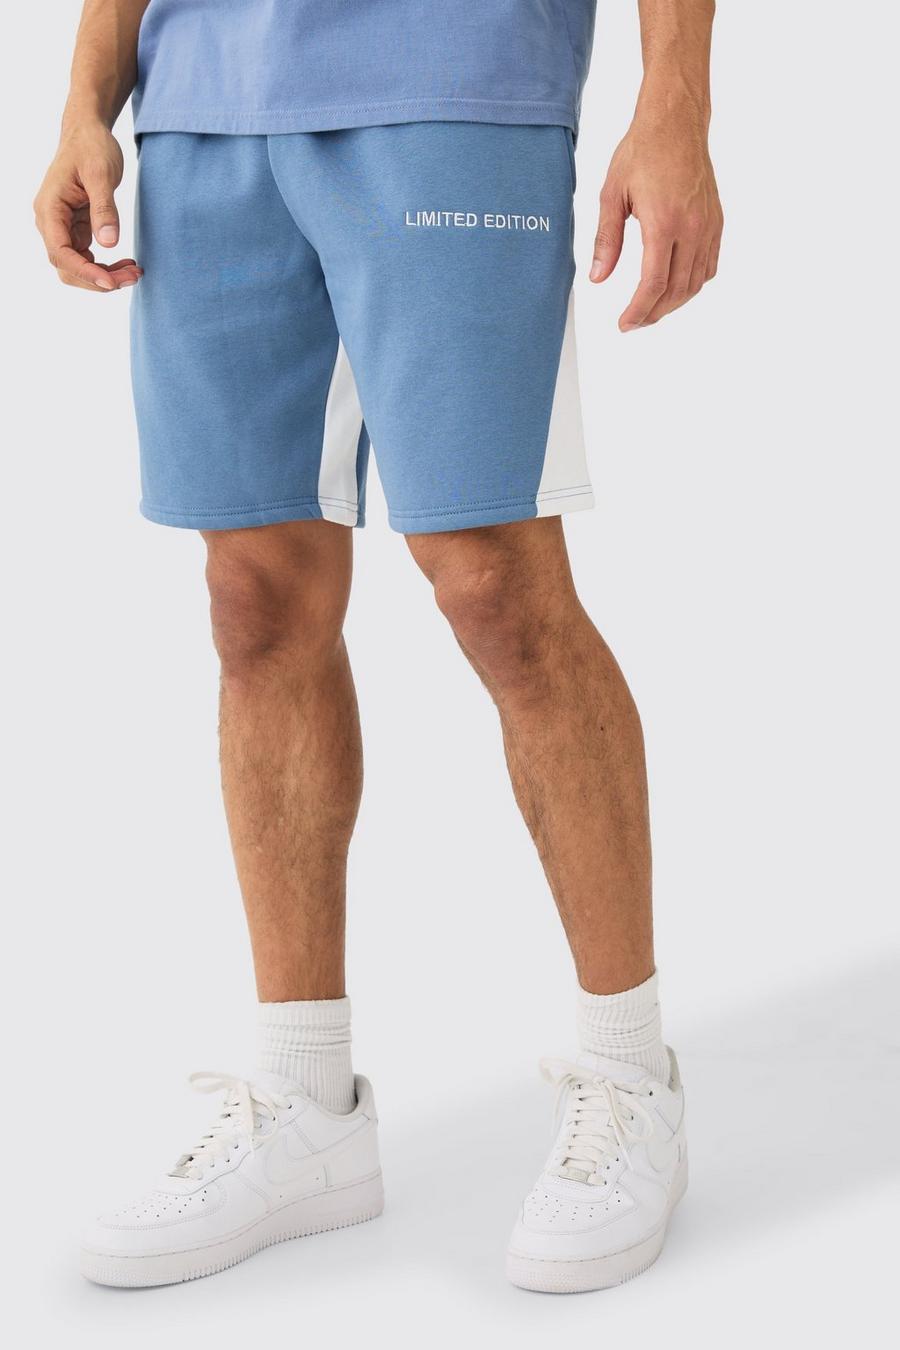 Lockere Limited Edition Shorts, Dusty blue